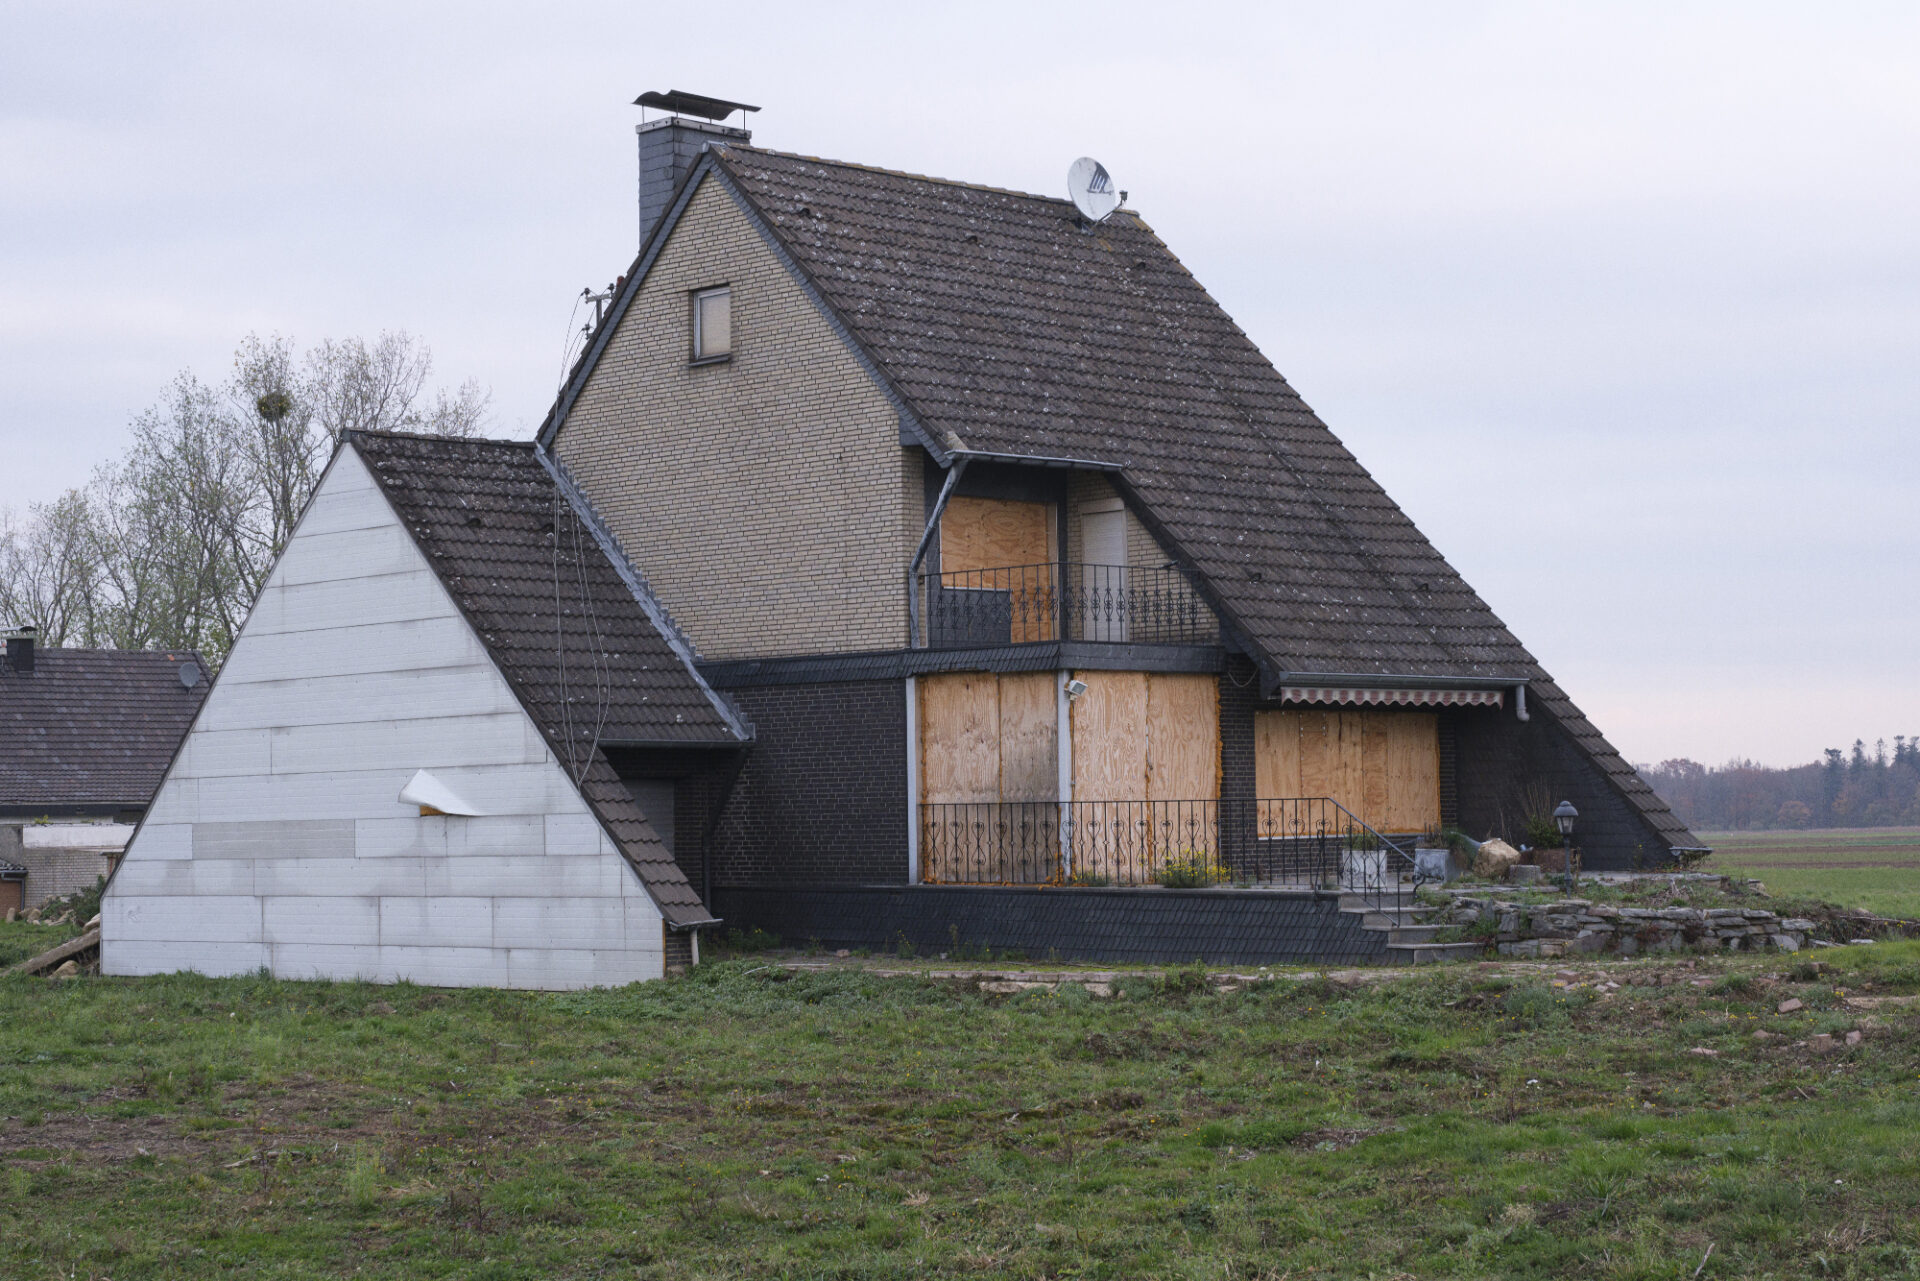 Condemned House, Old Morschenich, North-Rhine Westphalia, 2019, Alan GIgnoux